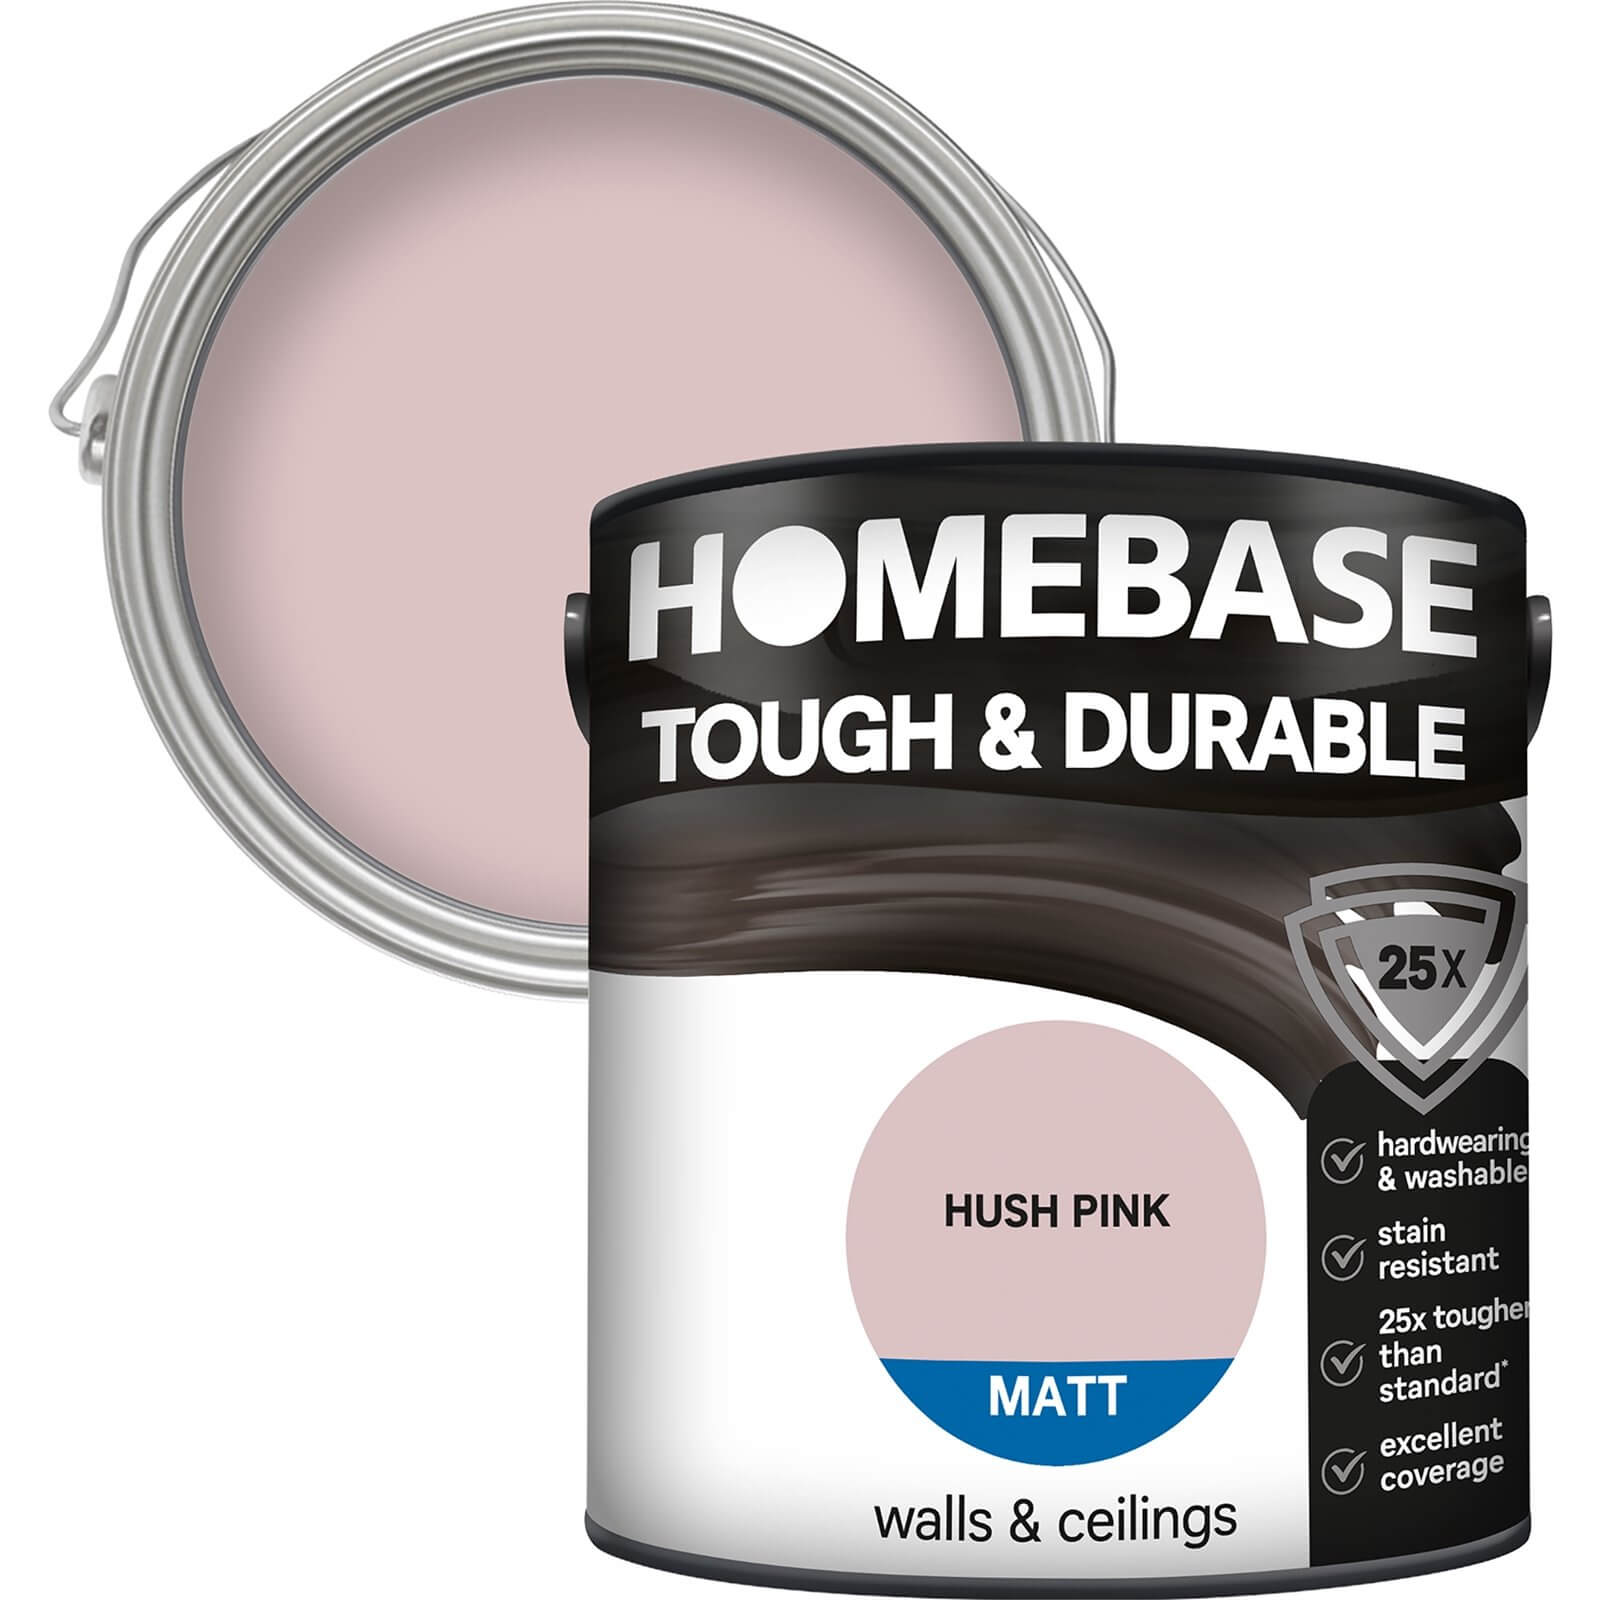 Homebase Tough & Durable Matt Paint Hush Pink - 2.5L